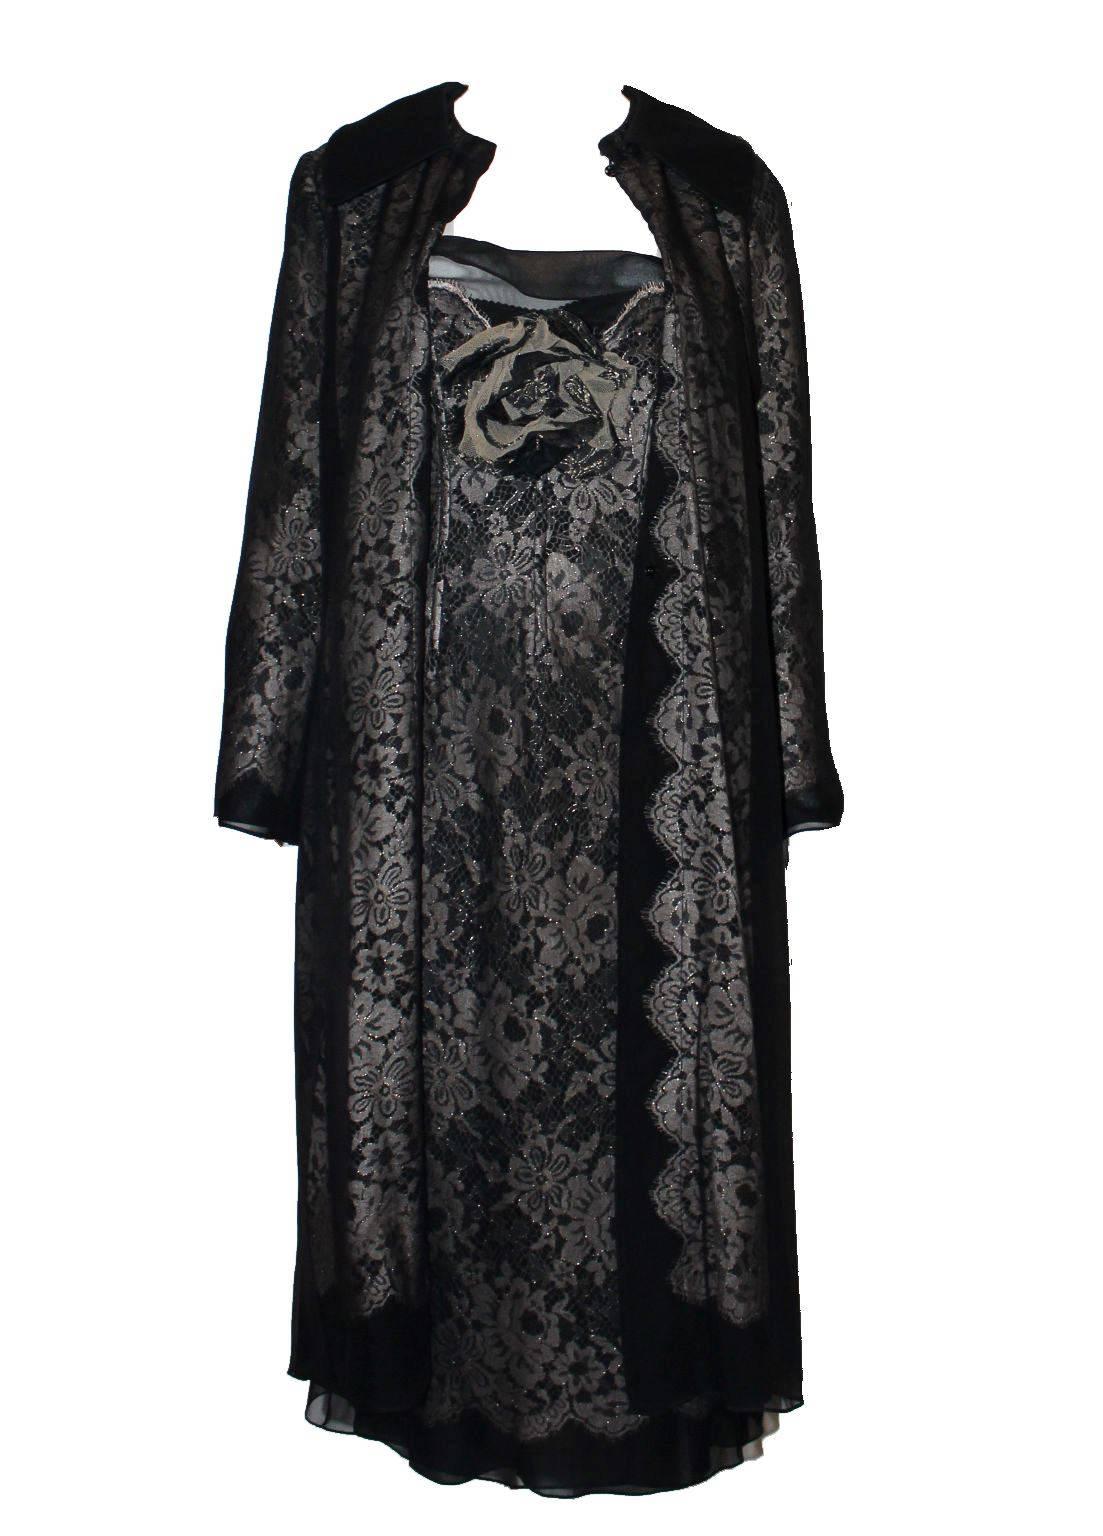 NEW NEU Dolce & Gabbana Seide & Spitze Knochen Korsett Kleid, Mantel & Brosche Ensemble 3pcS Damen im Angebot